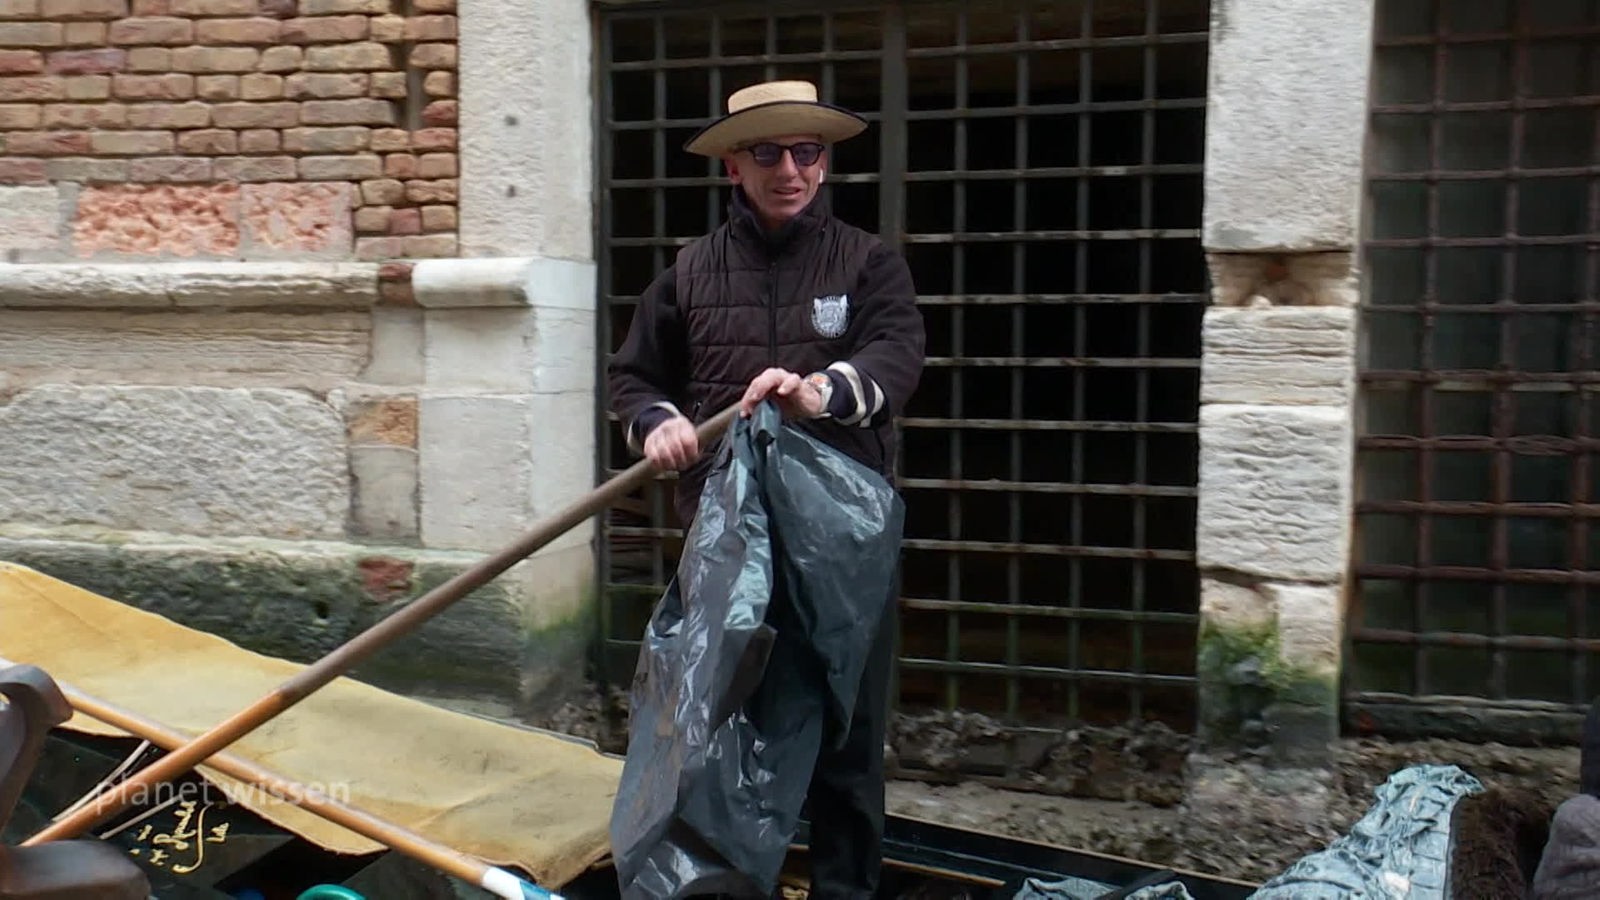 Screenshot aus dem Film "Gondolieri als Müllsammler"